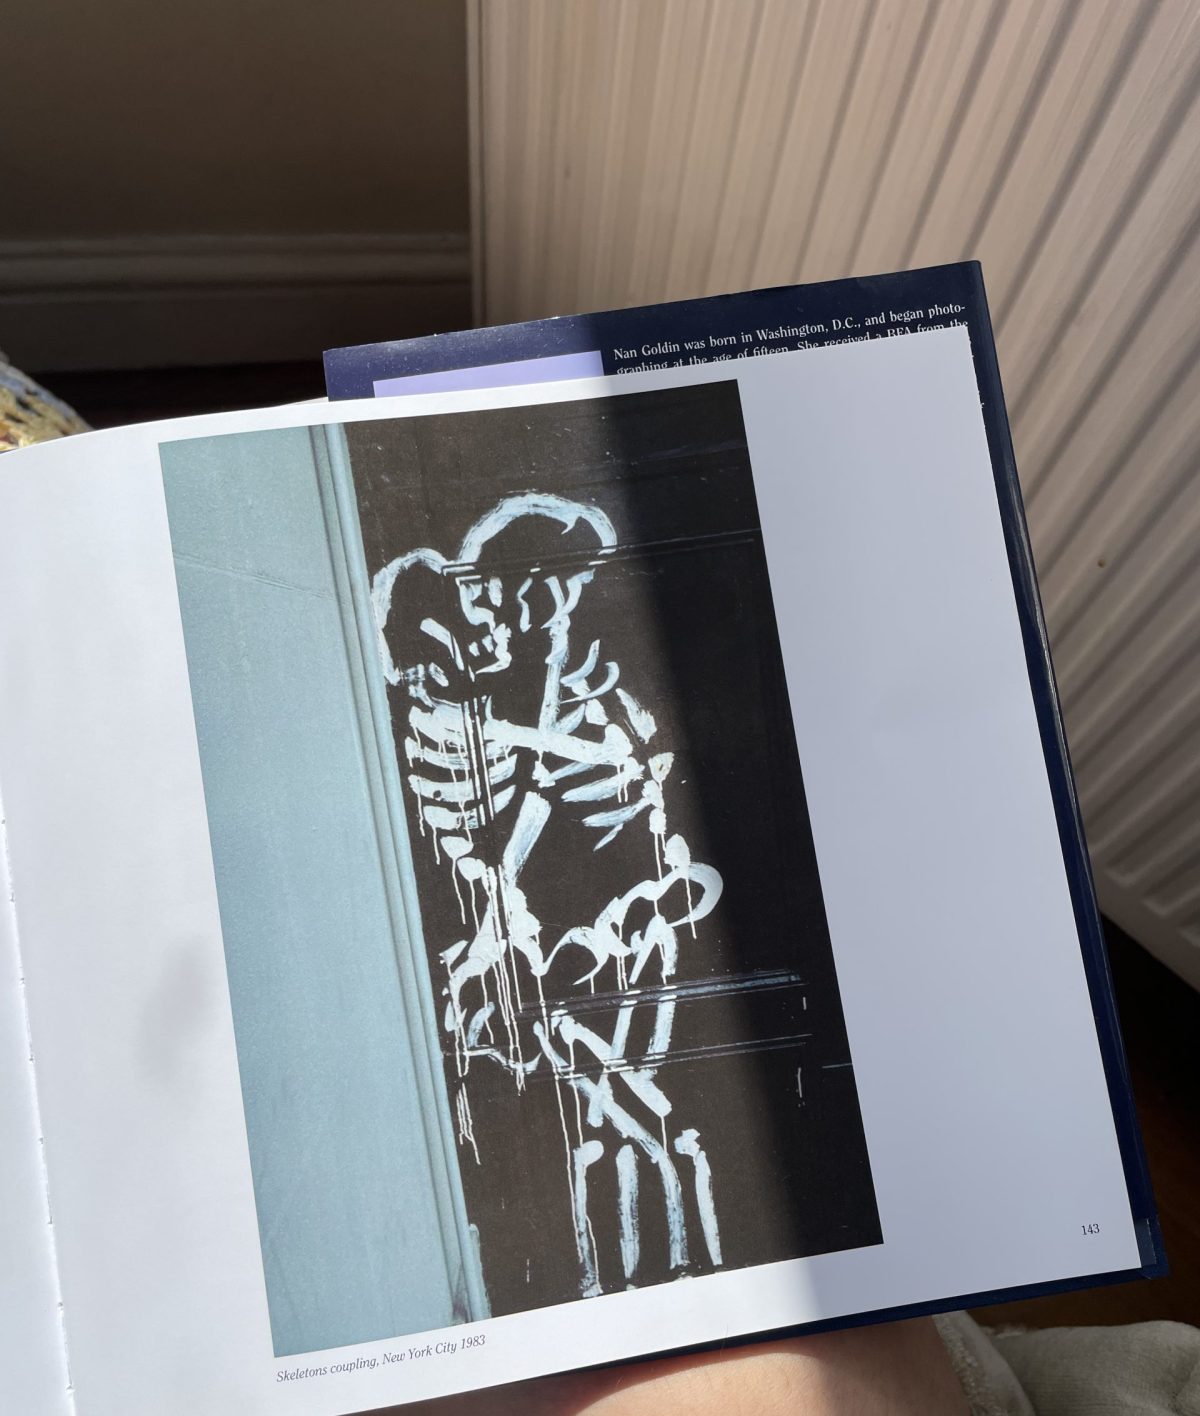 The image as object [Nan Goldin & me] | Simone de Villiers | Darklight Digital